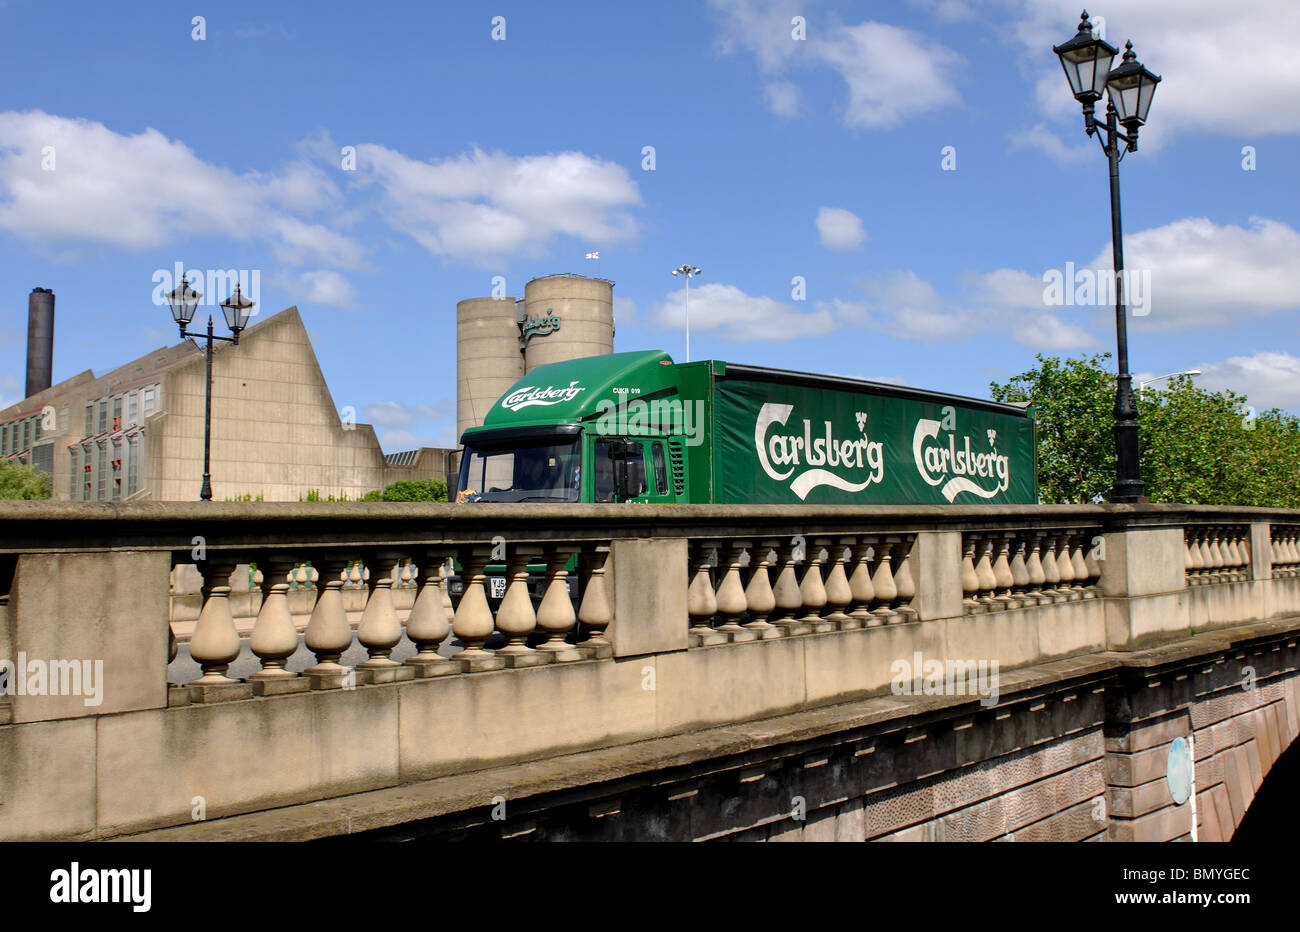 La Carlsberg autocarro attraversando ponte da Carlsberg Brewery, Northampton, Northamptonshire, England, Regno Unito Foto Stock